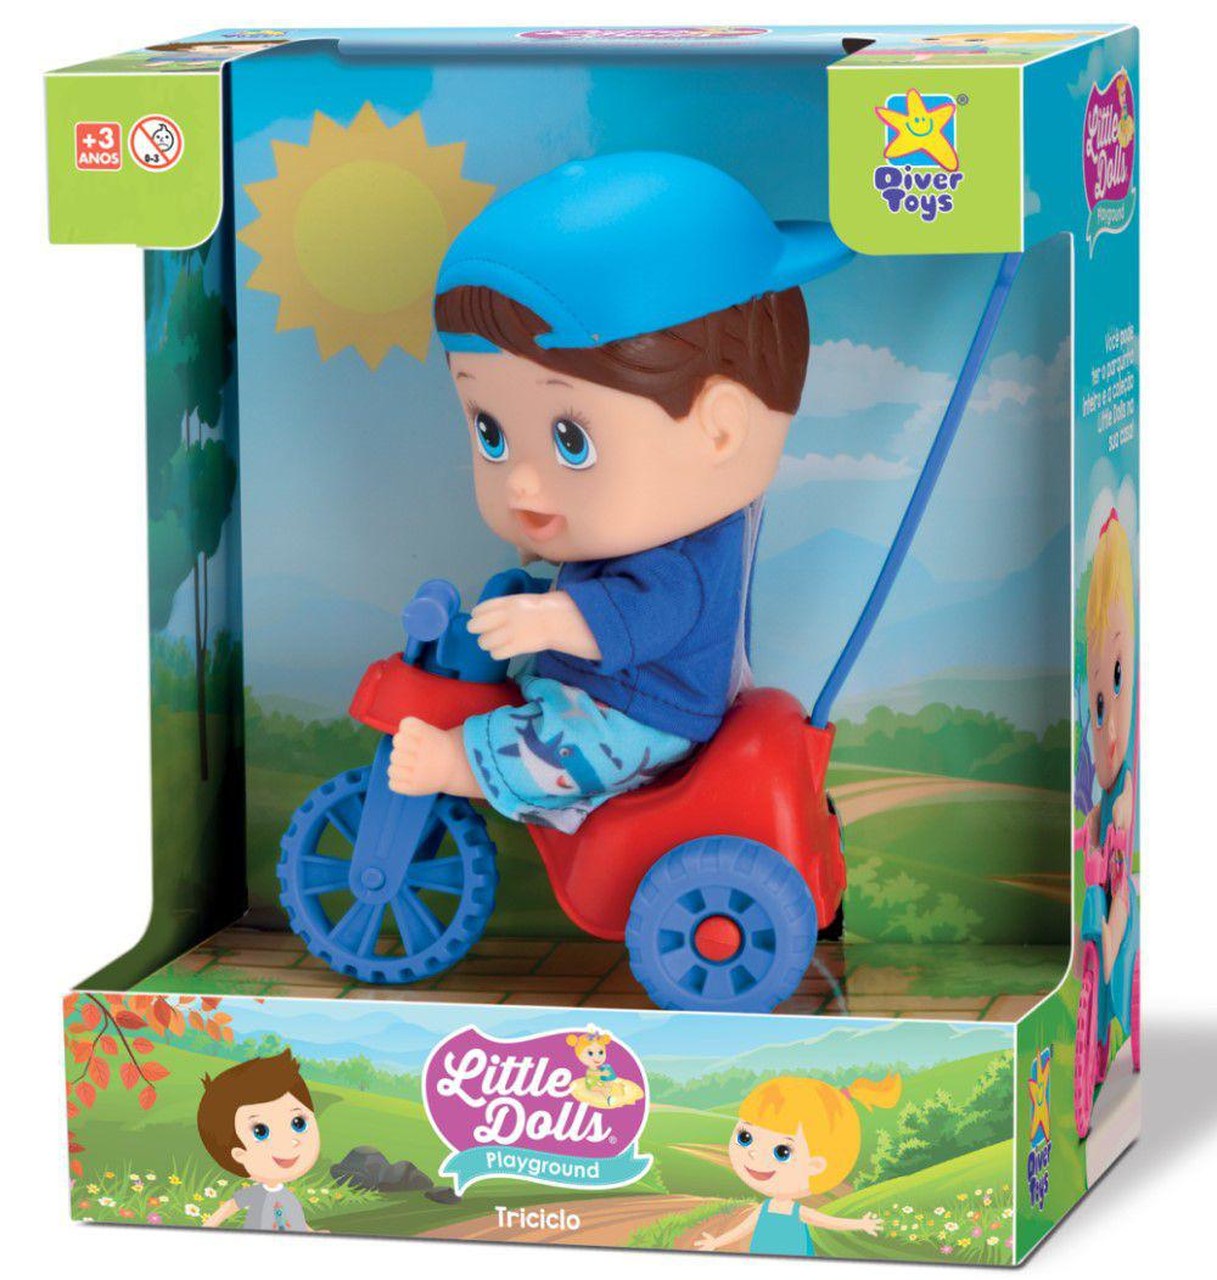 Boneco Little Dolls Playground Menino Triciclo - Diver Toys